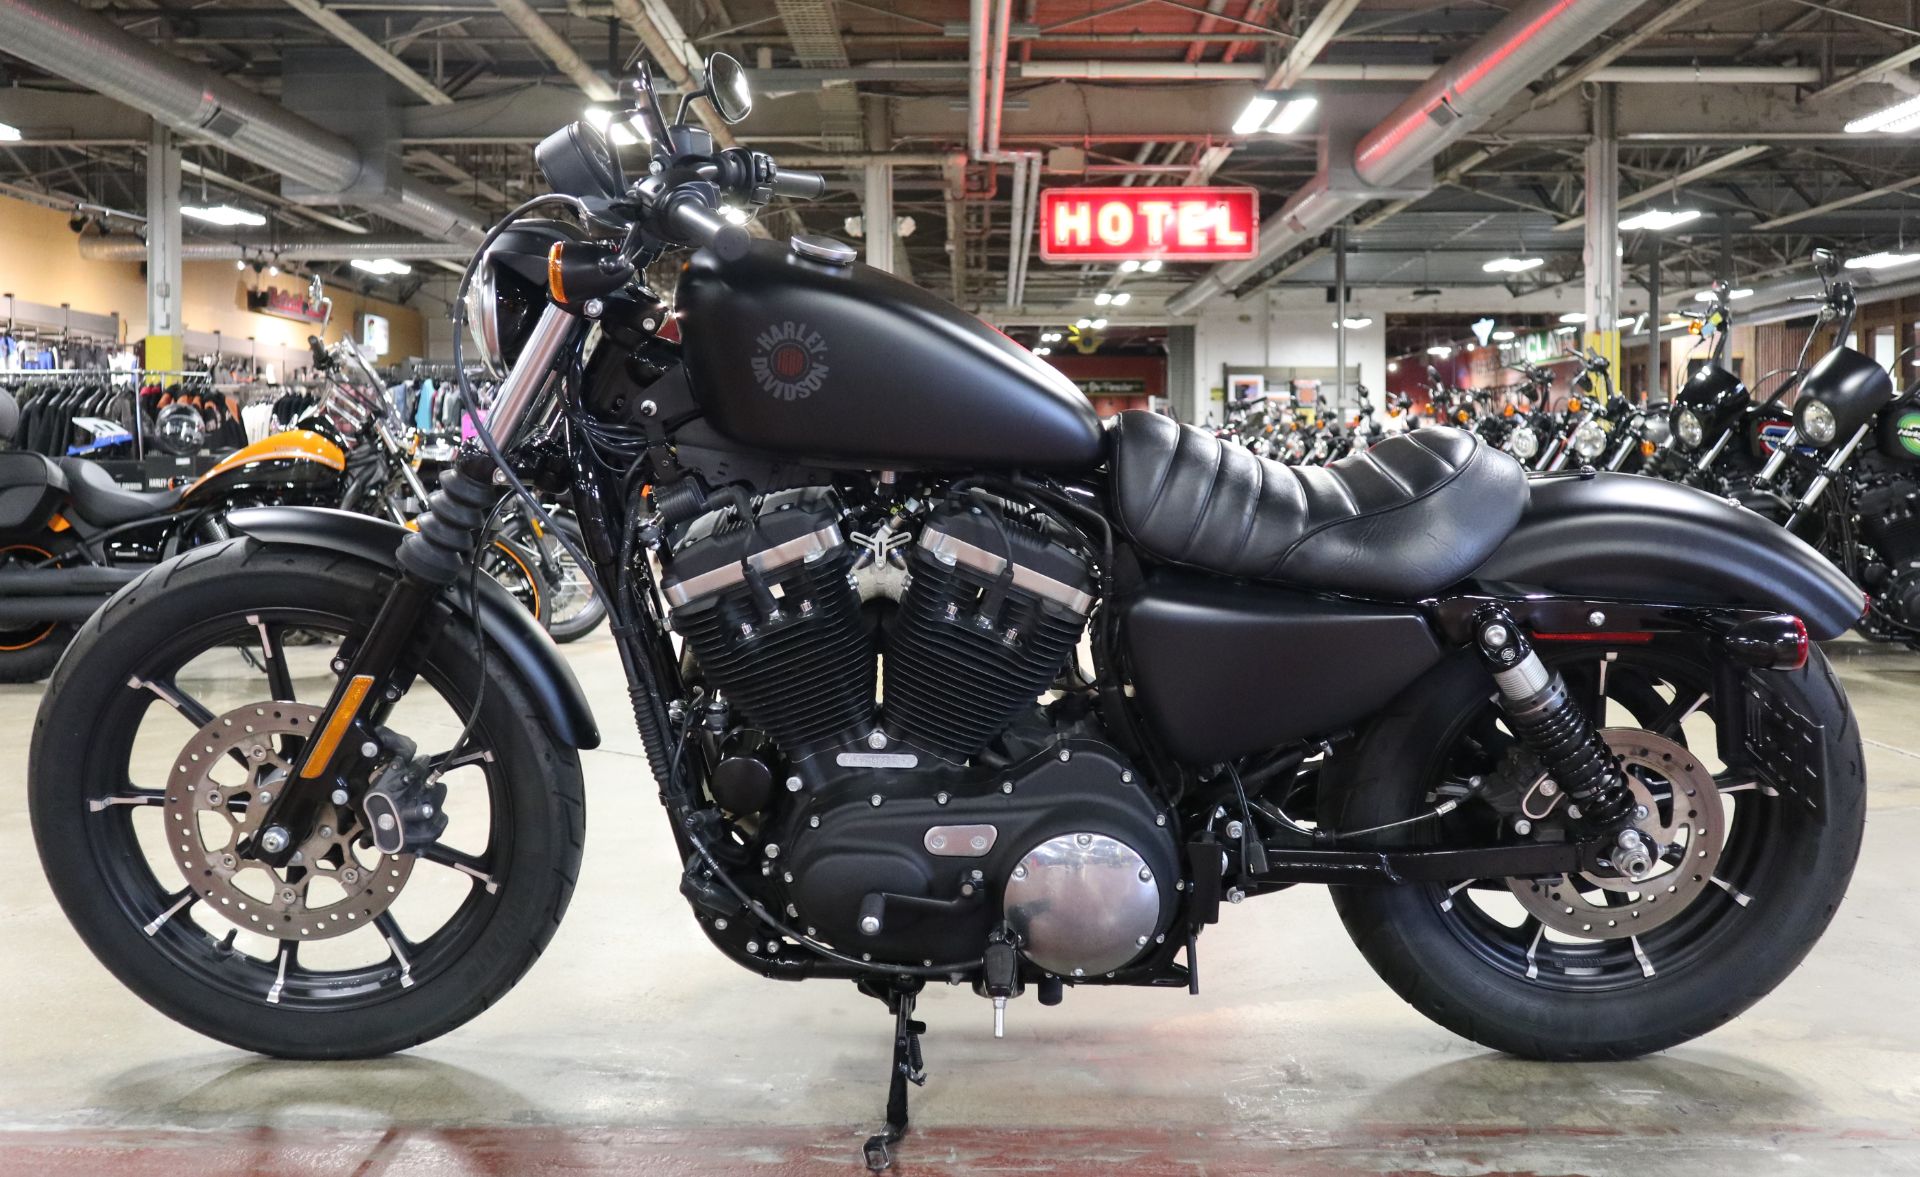 2021 Harley-Davidson Iron 883™ in New London, Connecticut - Photo 5